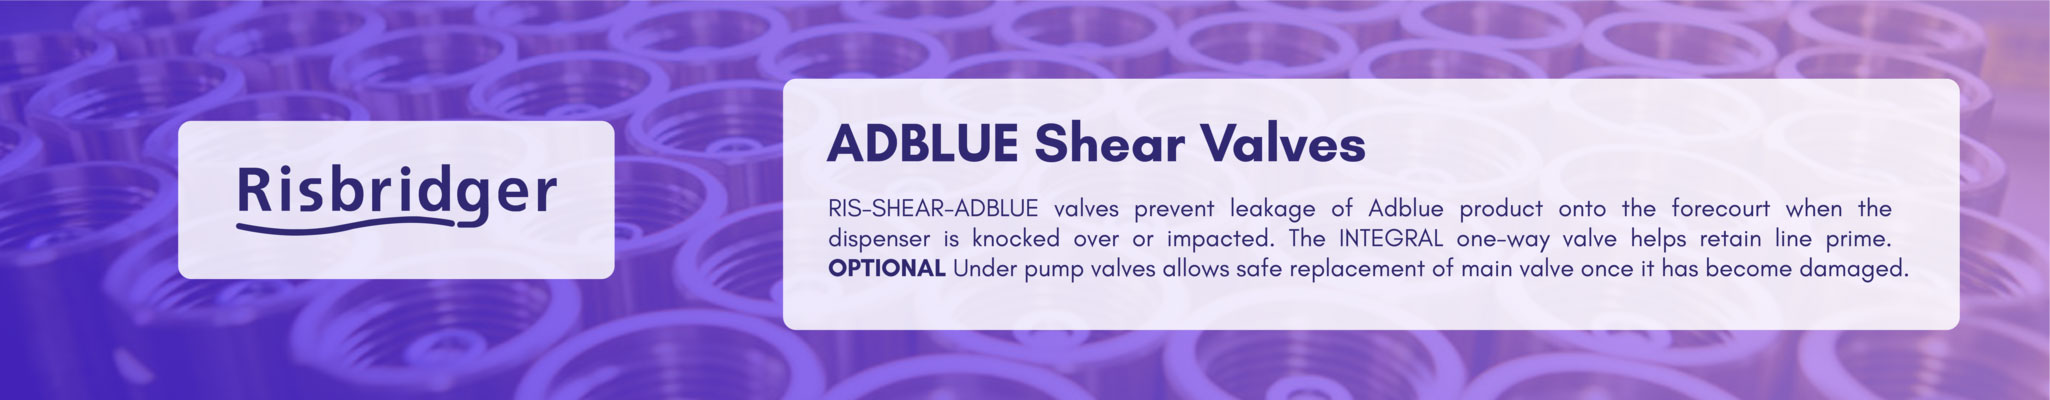 ADBLUE Shear Valves